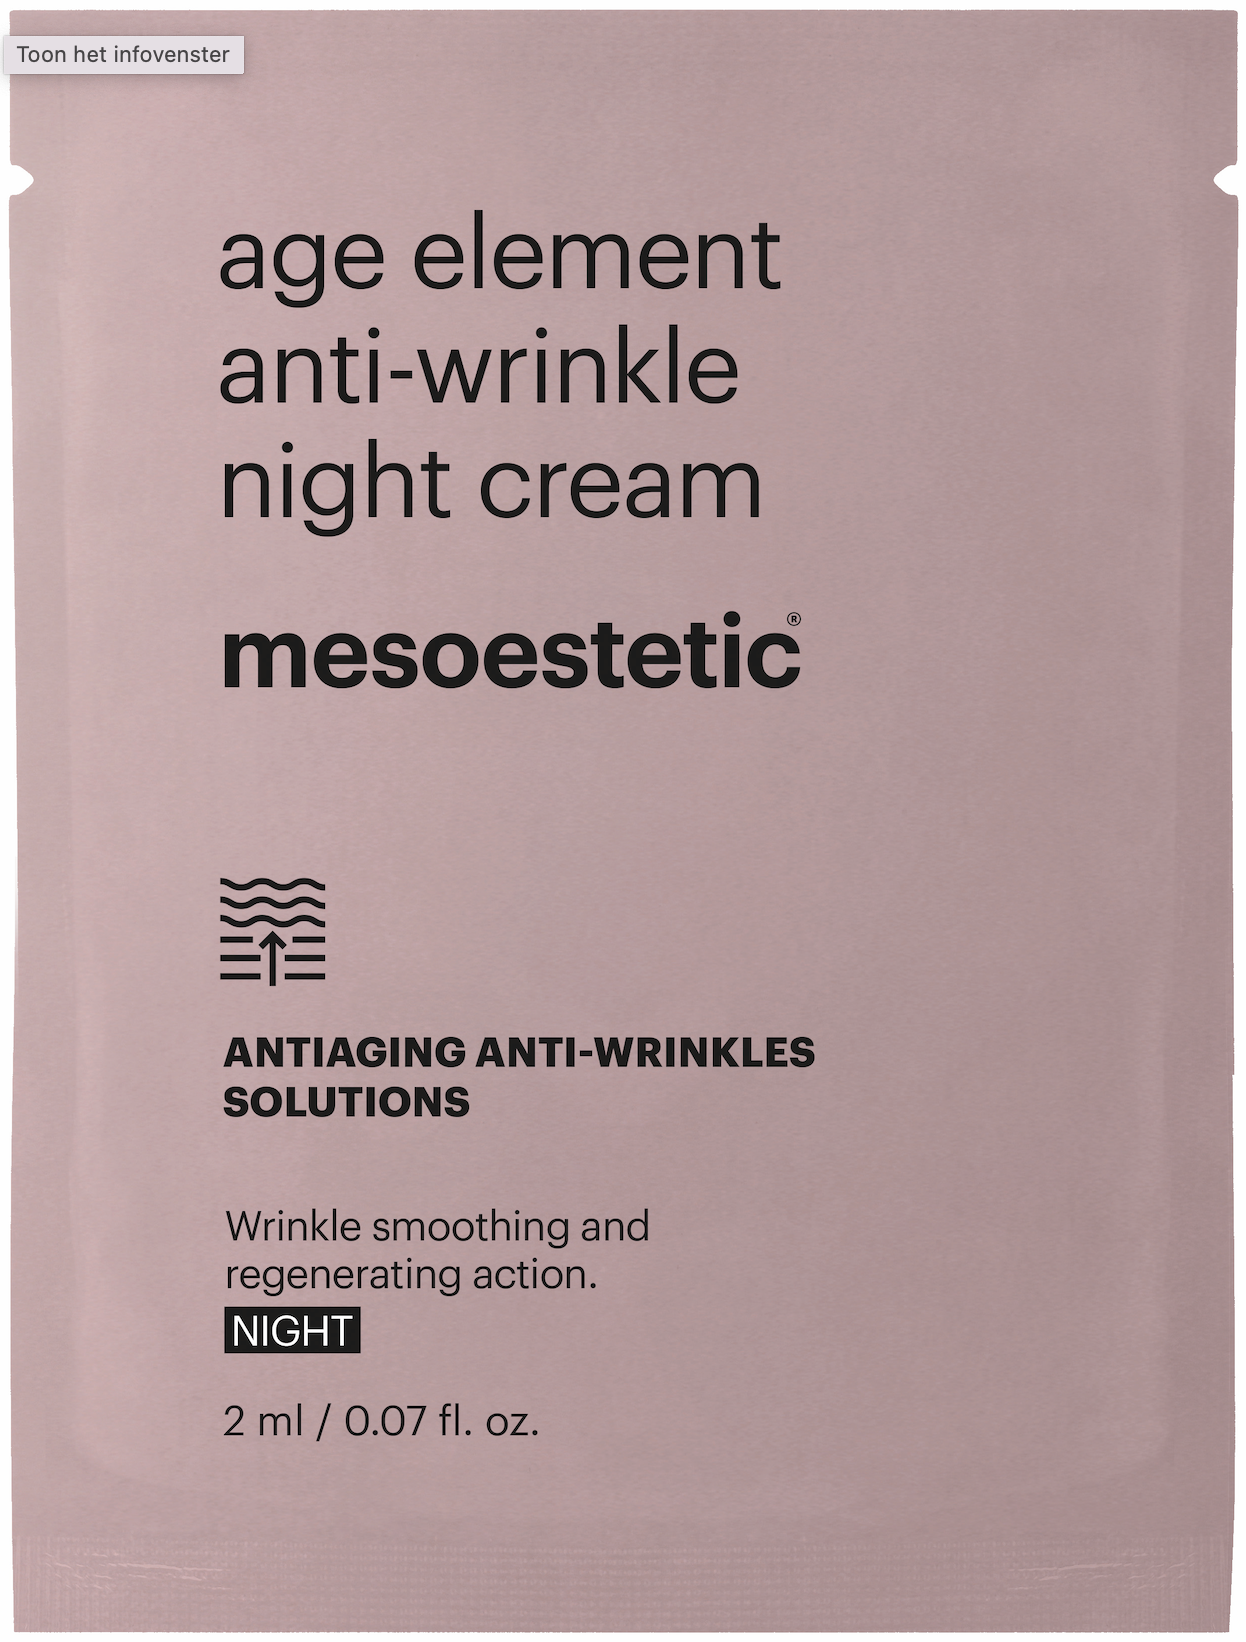 Age Element Anti-wrinkle Night Cream Sample